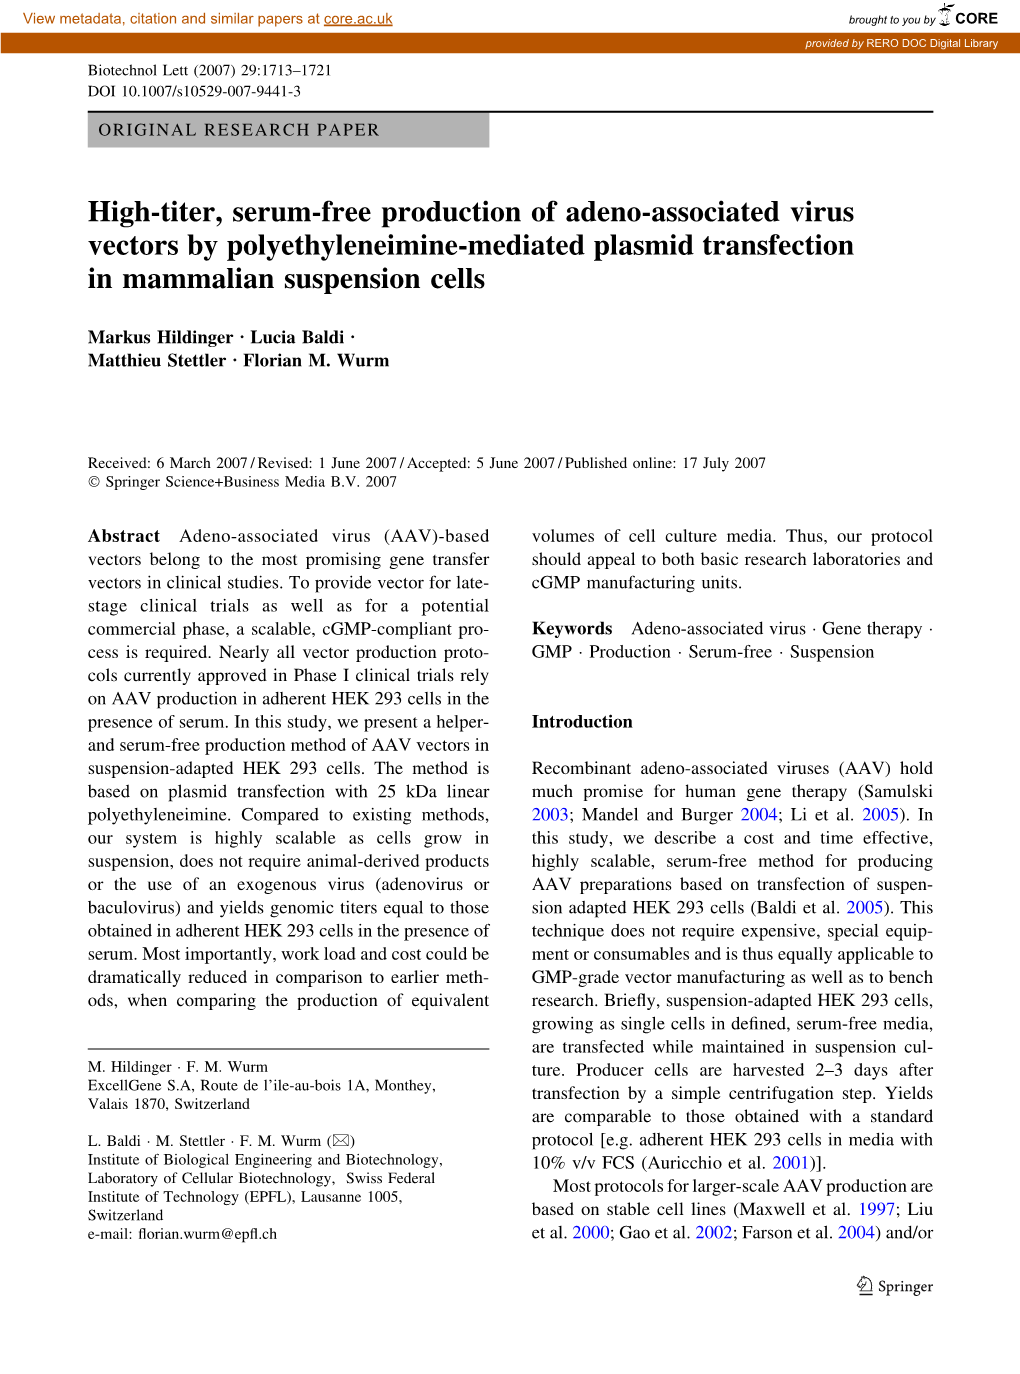 High-Titer, Serum-Free Production of Adeno-Associated Virus Vectors by Polyethyleneimine-Mediated Plasmid Transfection in Mammalian Suspension Cells